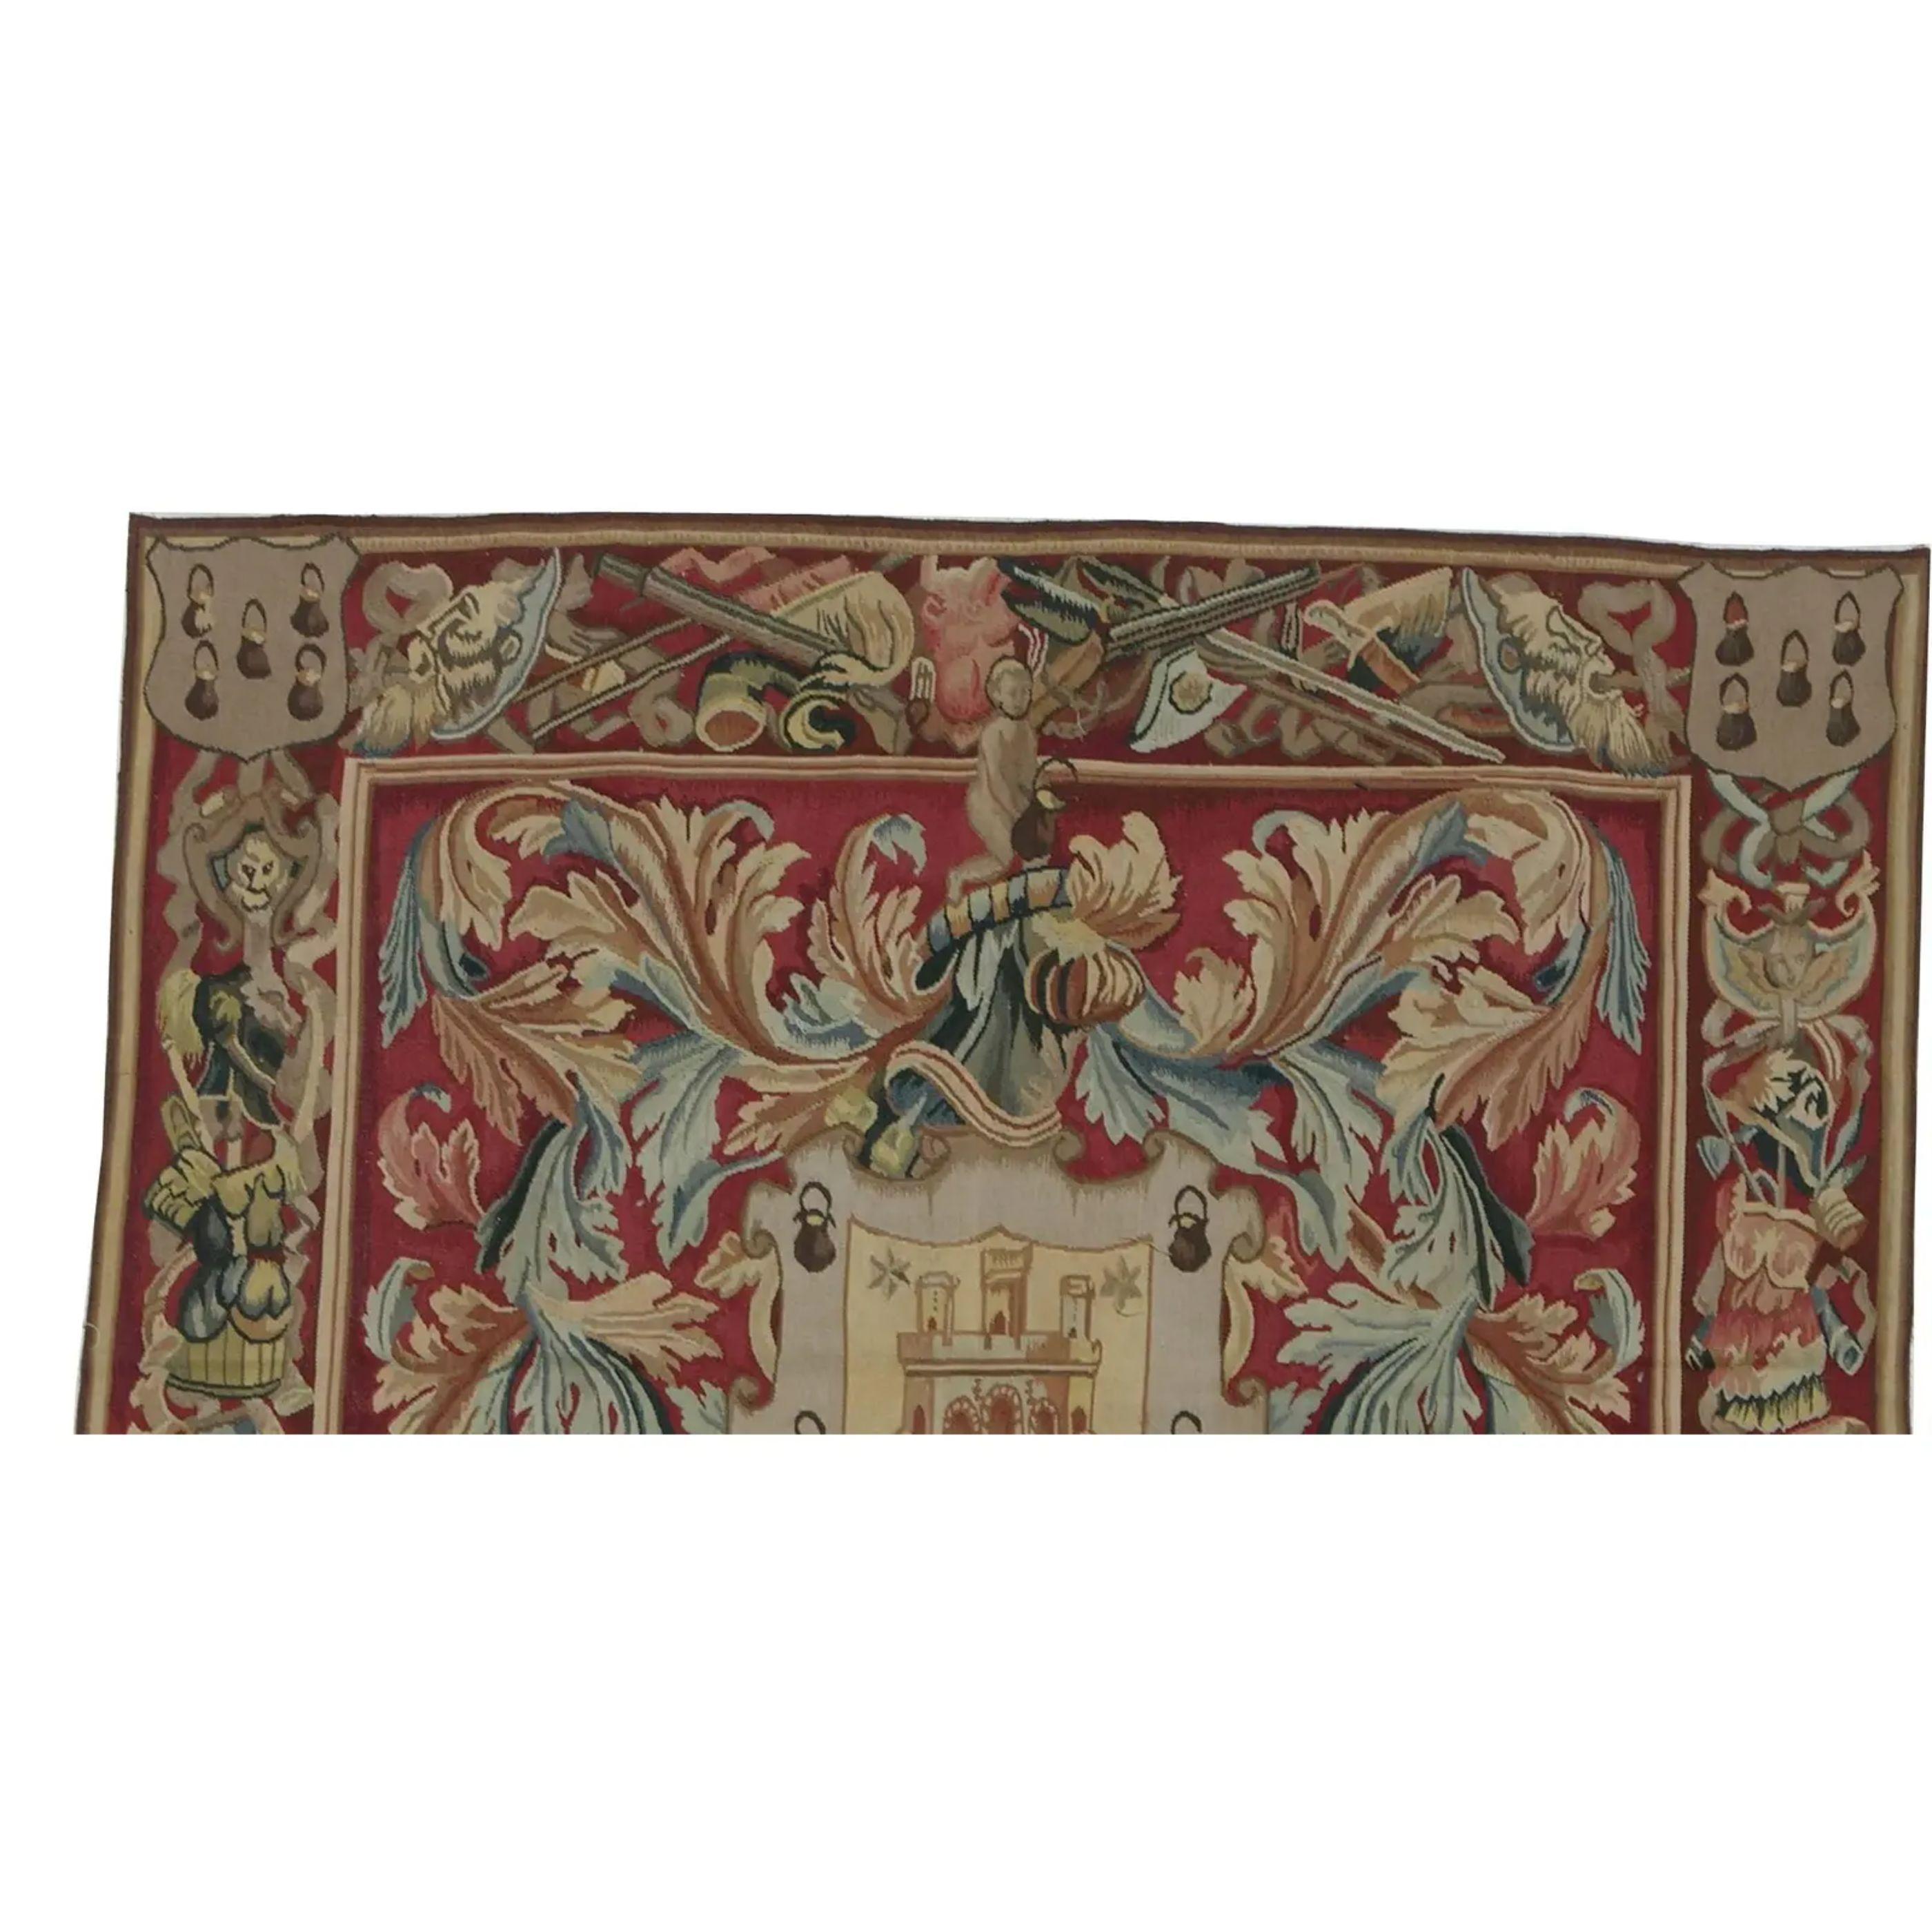 Unknown Vintage Tapestry Ddepicting Royal Emblem 3.8X3.9 For Sale